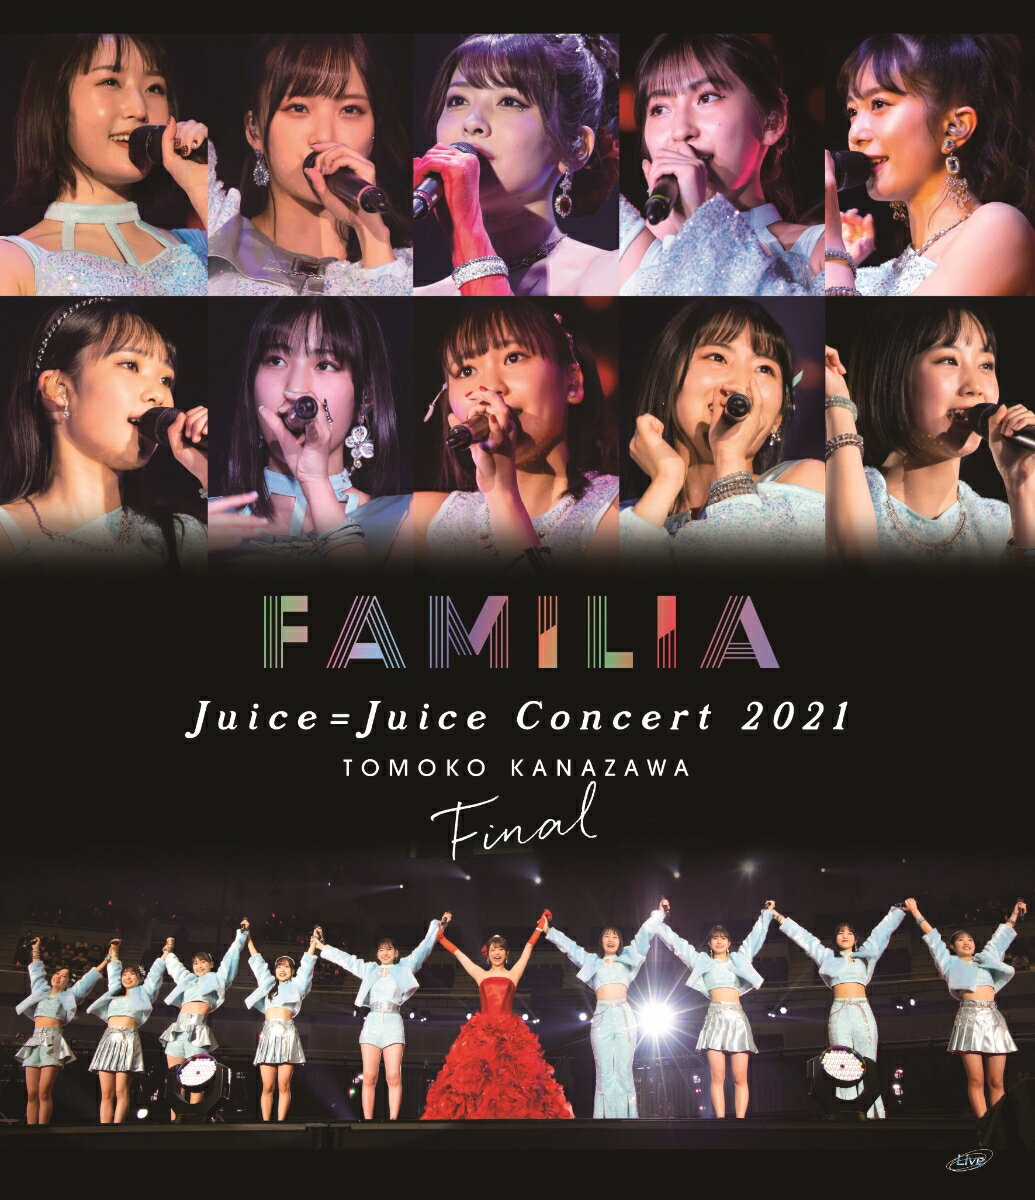 Juice=Juice Concert 2021 〜FAMILIA〜 金澤朋子ファイナル【Blu-ray】